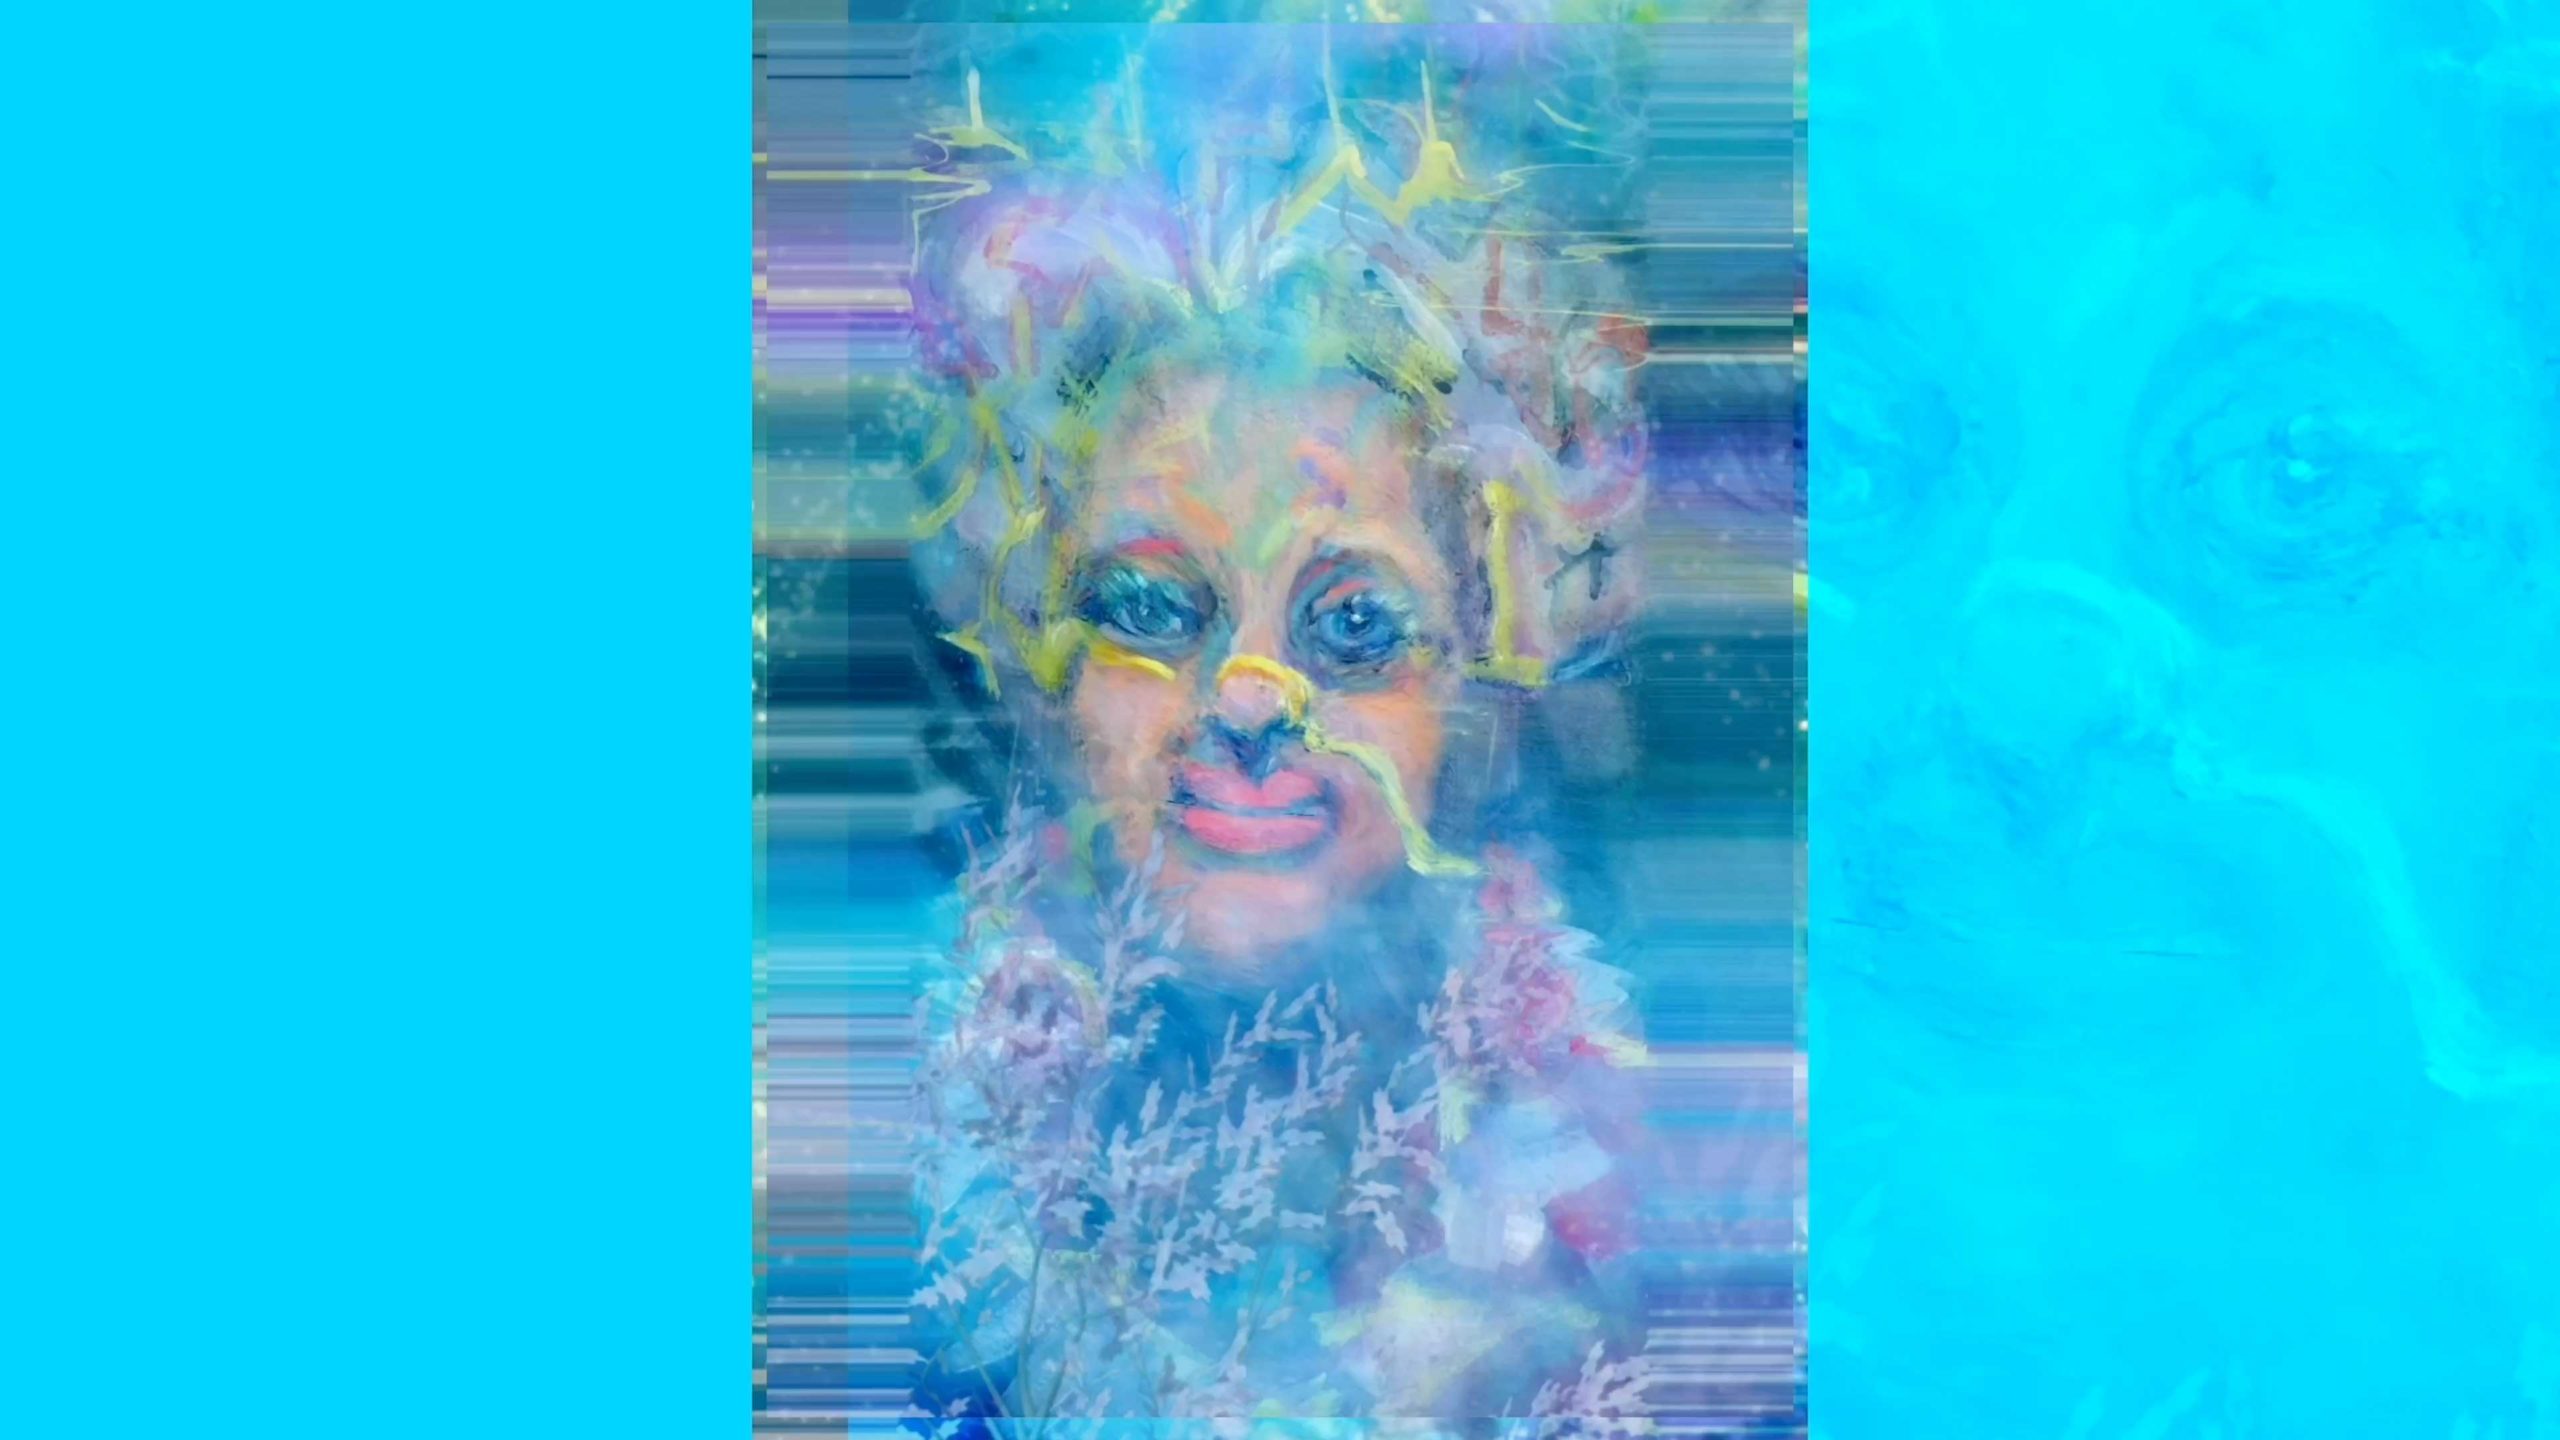 Randi Matushevitz, Queenie the Psychic, 2022. Digital video, 3840 x 2160 pixels. Duration: 0:24 seconds.